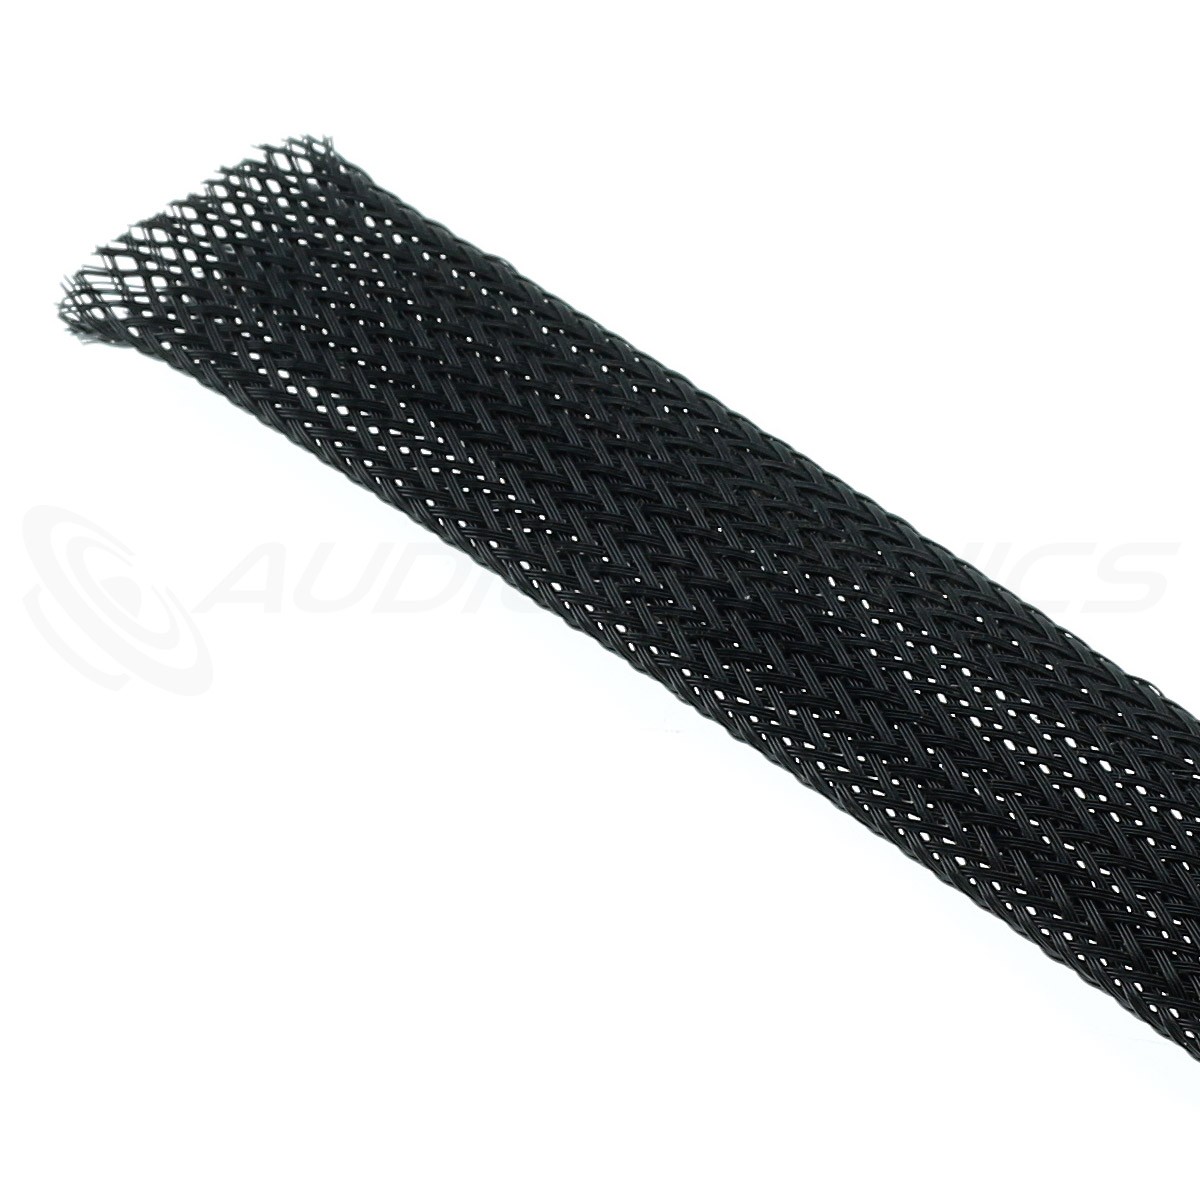 Extensible Braided Sheath Nylon (PET) 3-6mm Black